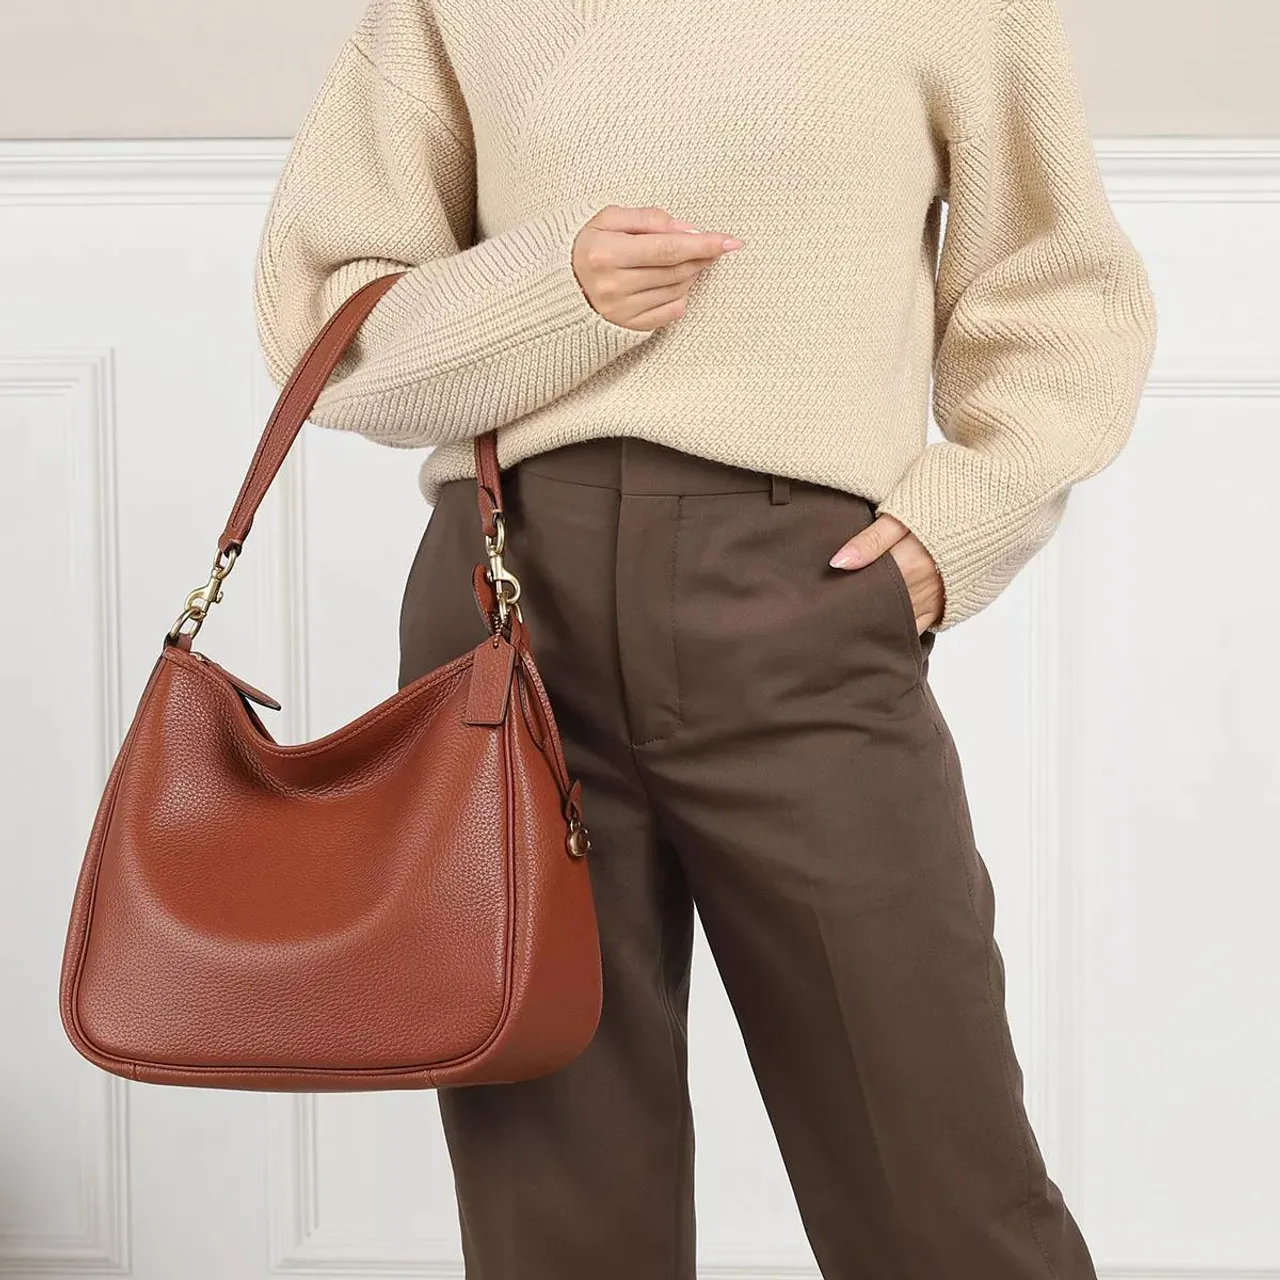 Coach Satchels - Soft Pebble Leather Cary Shoulder Bag - brown - Satchels for ladies